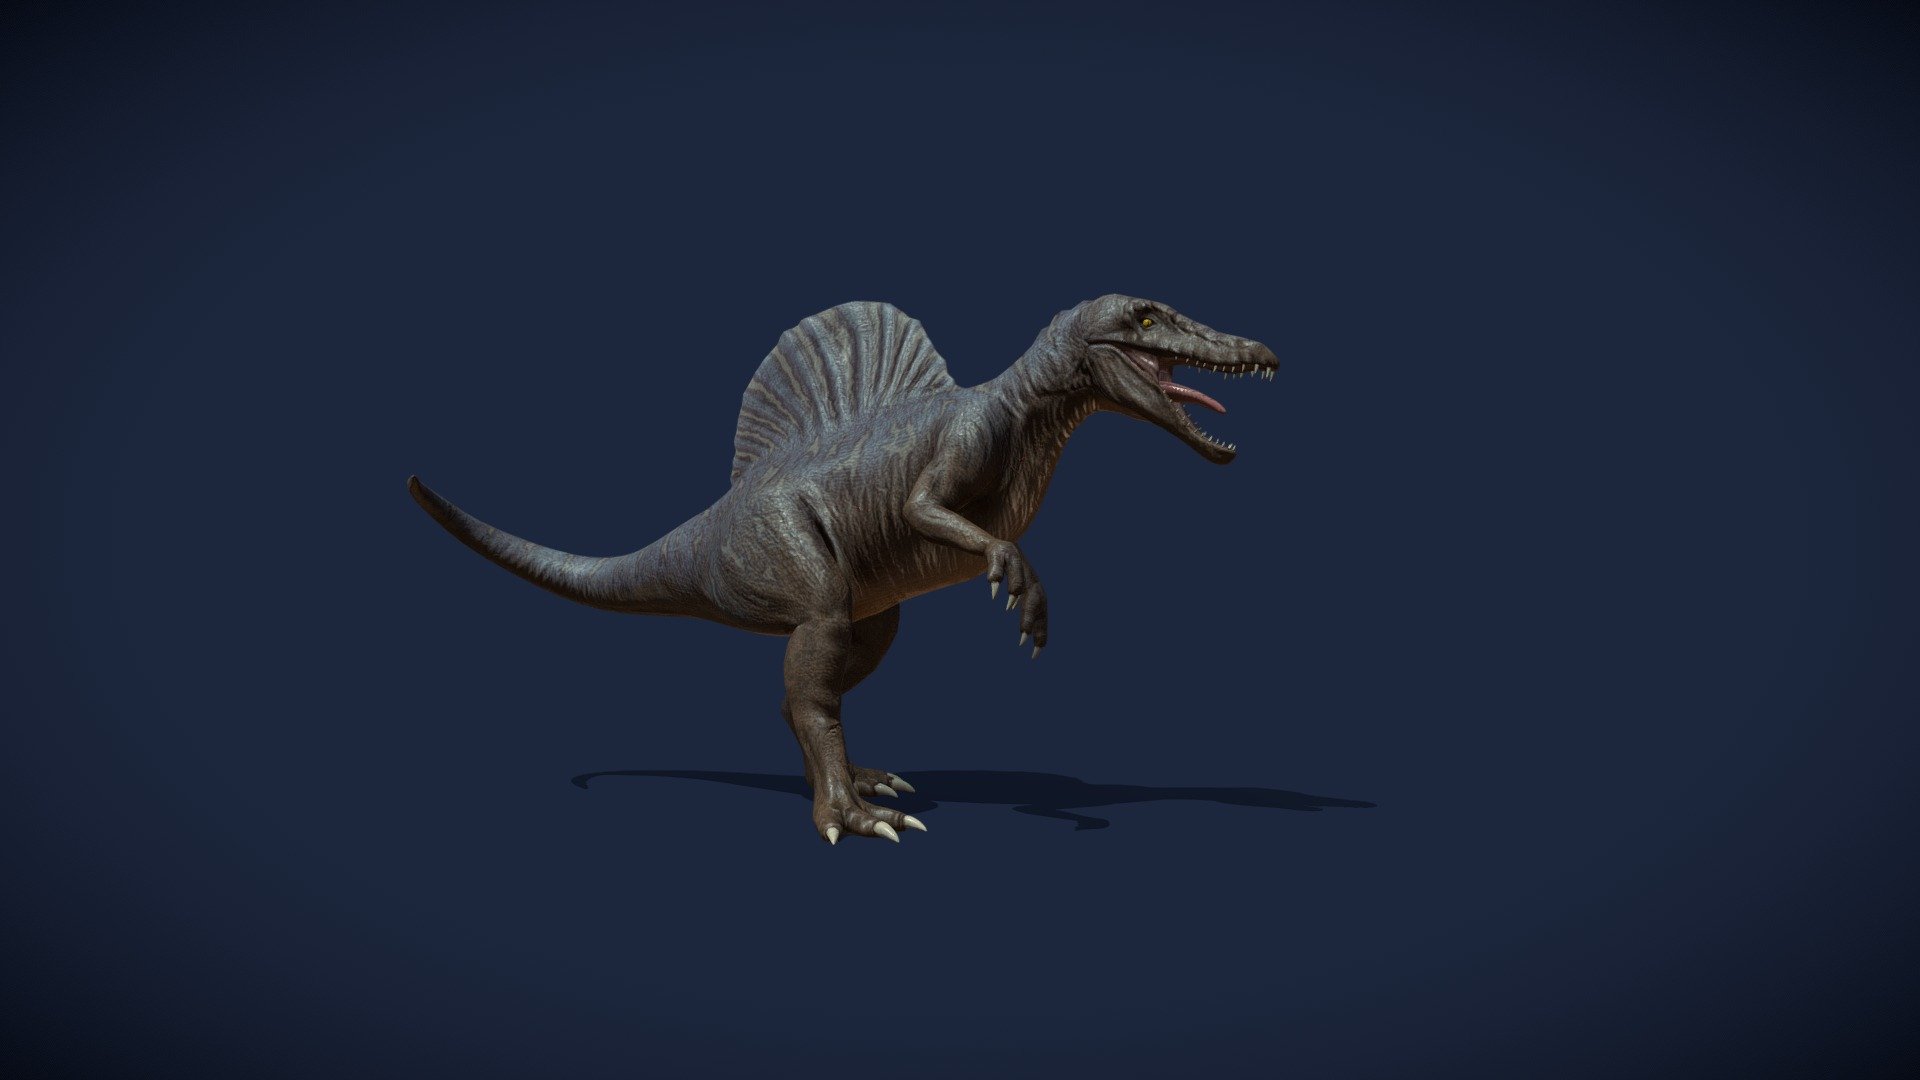 Spinosaur, the bloodthirsty dinosaur